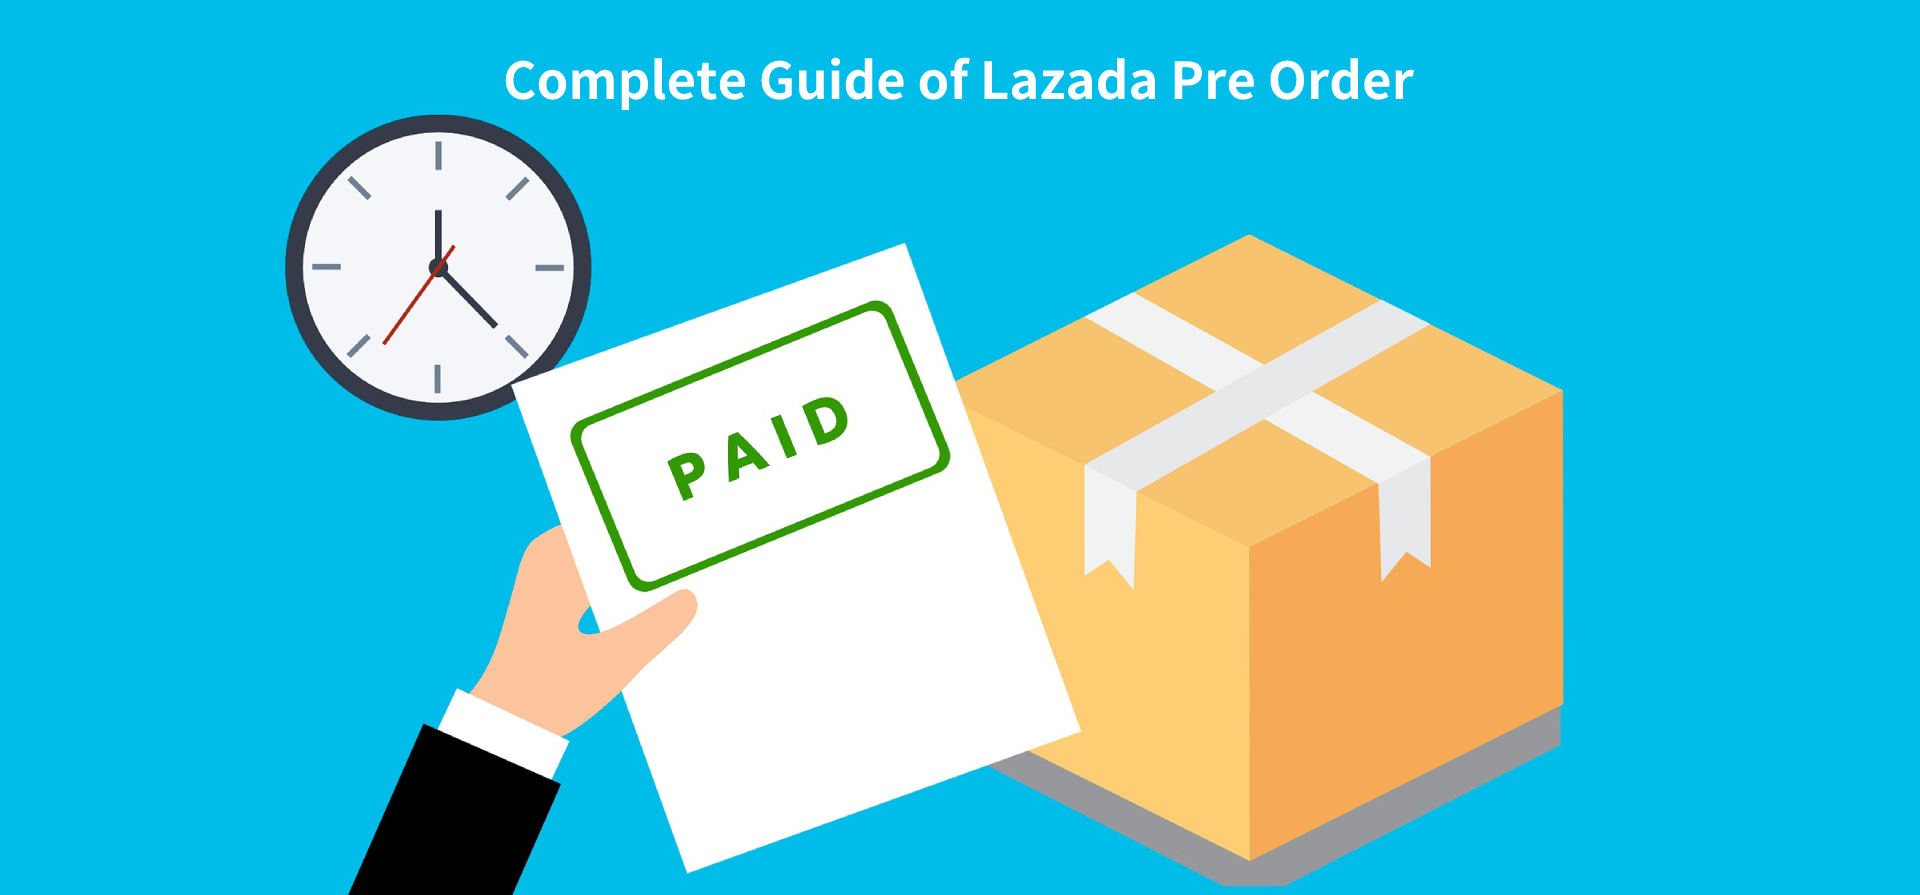 Complete Guide of Lazada Pre Order